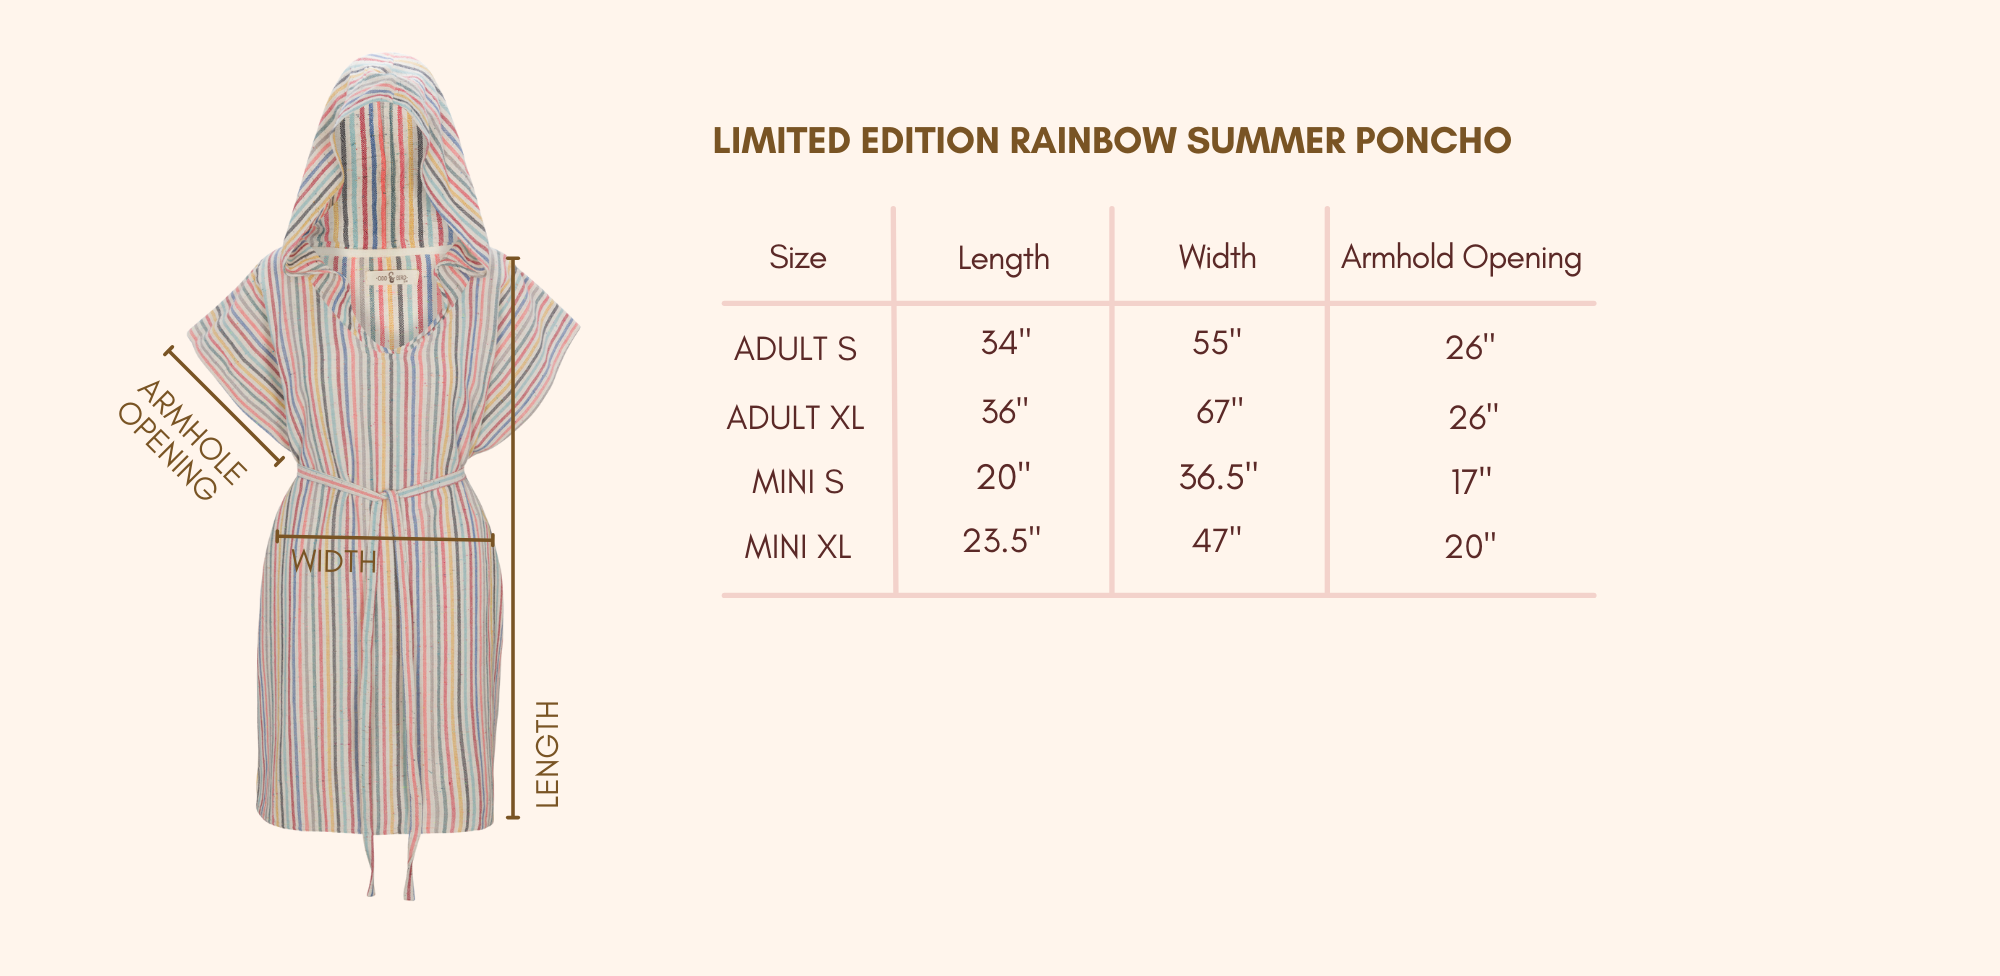 Limited Edition Rainbow Summer Poncho